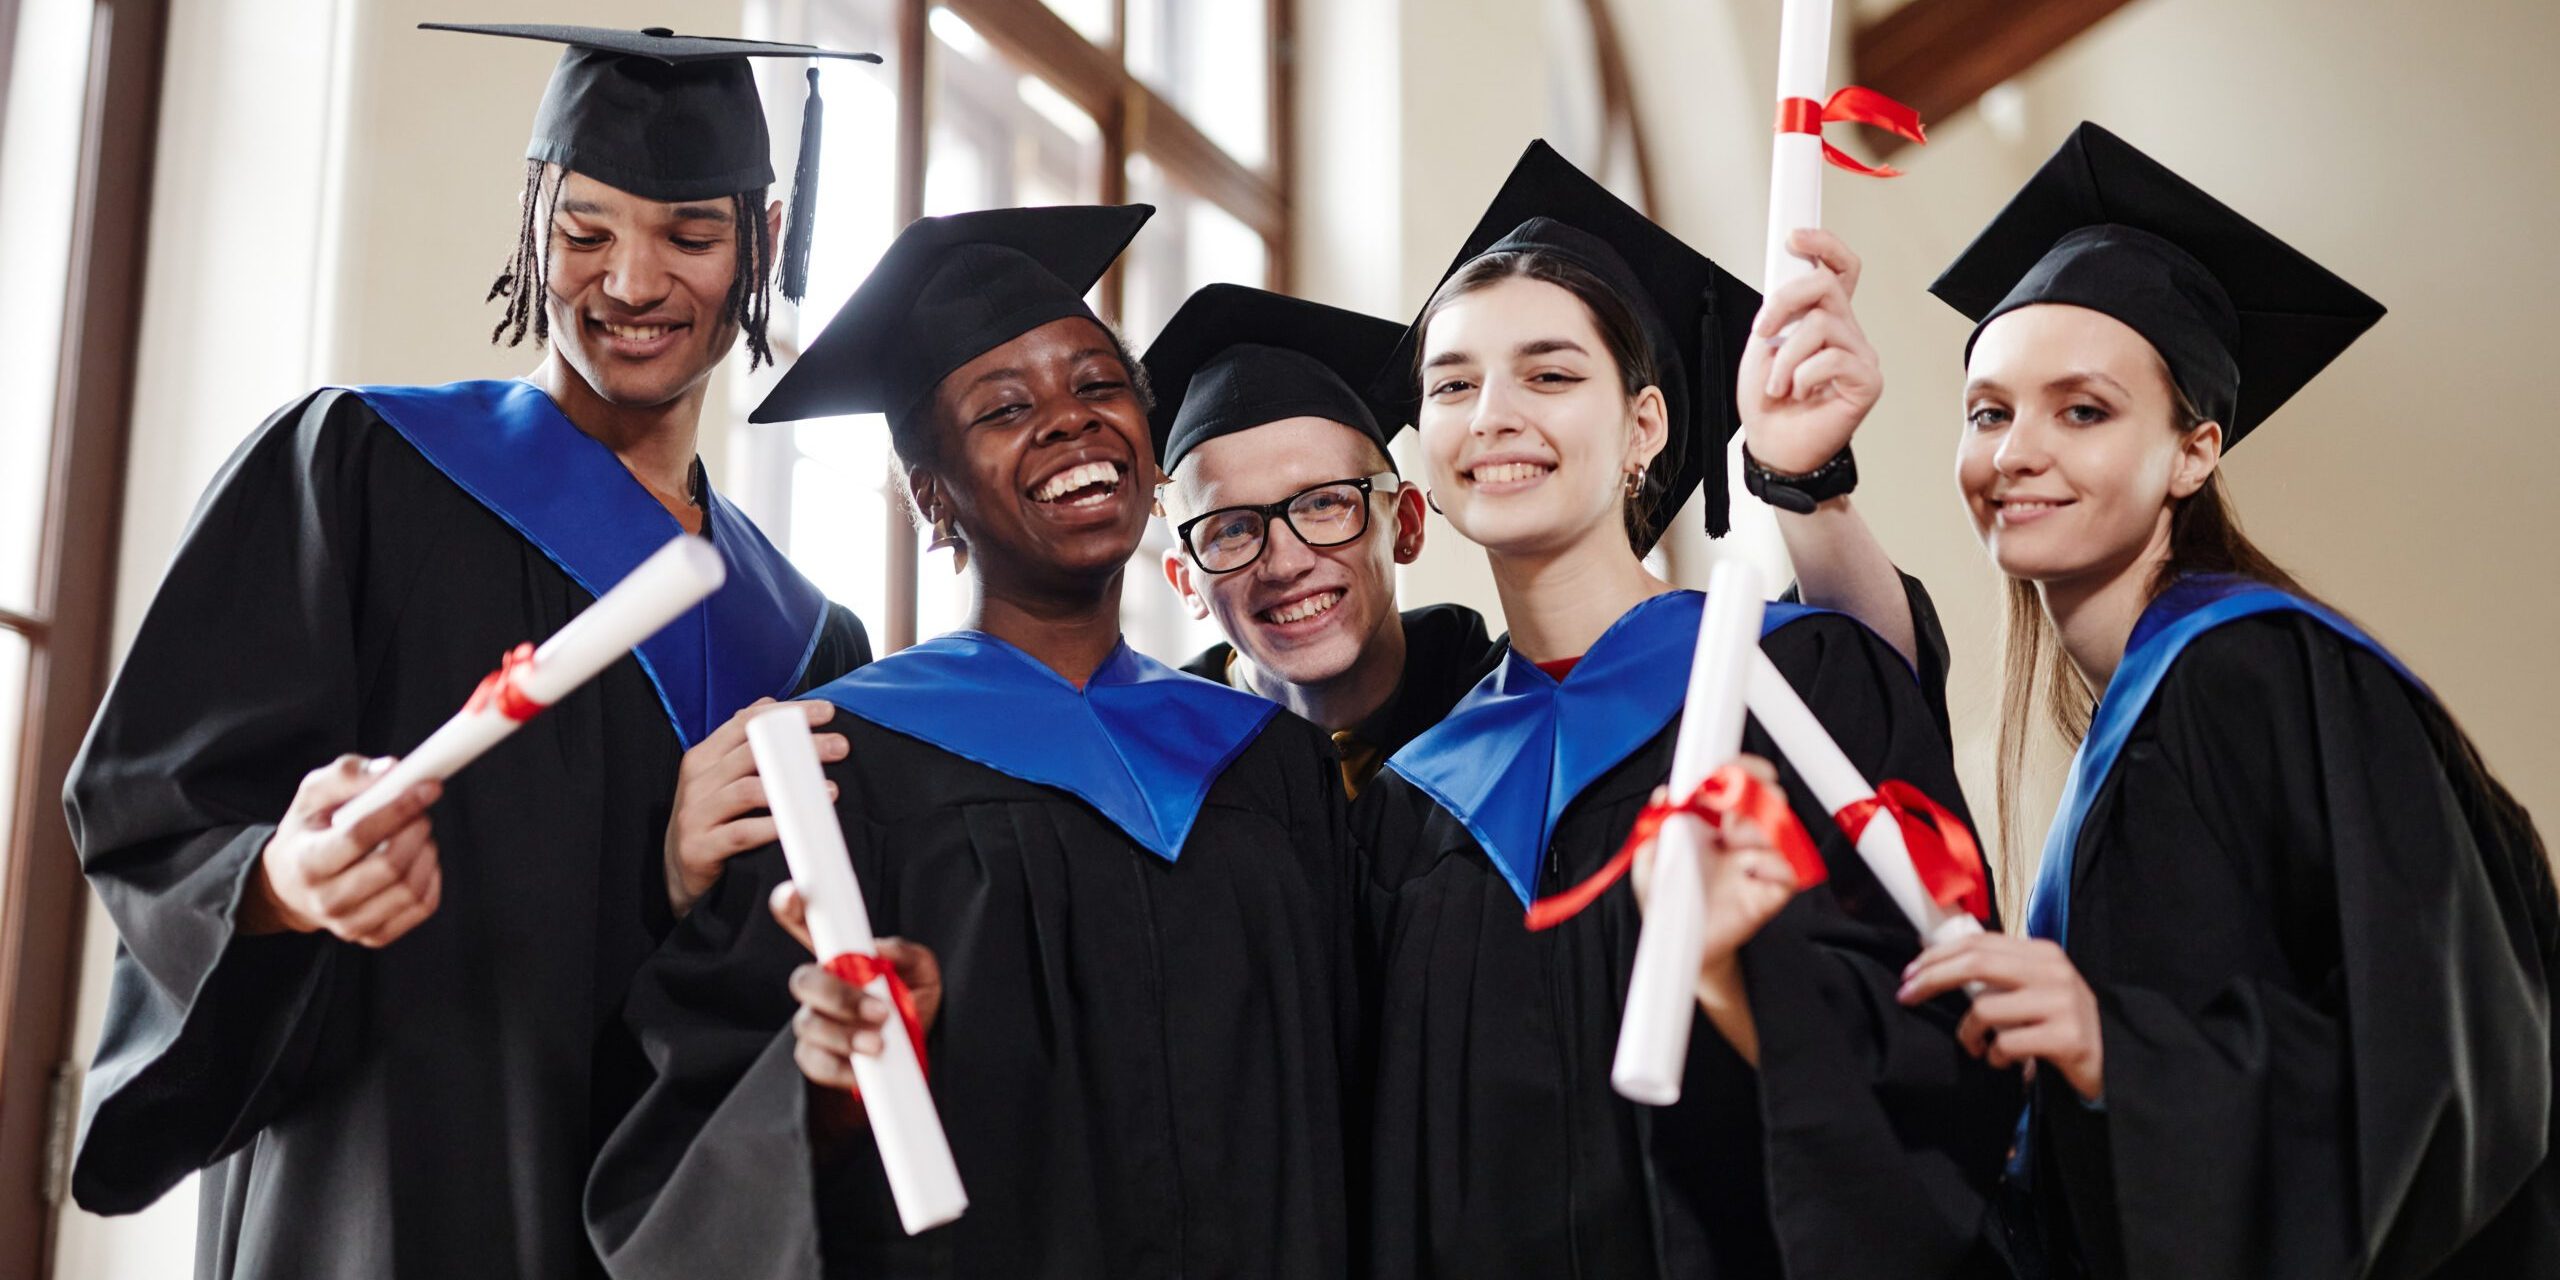 diverse group of students graduating college 2022 06 29 19 29 04 utc